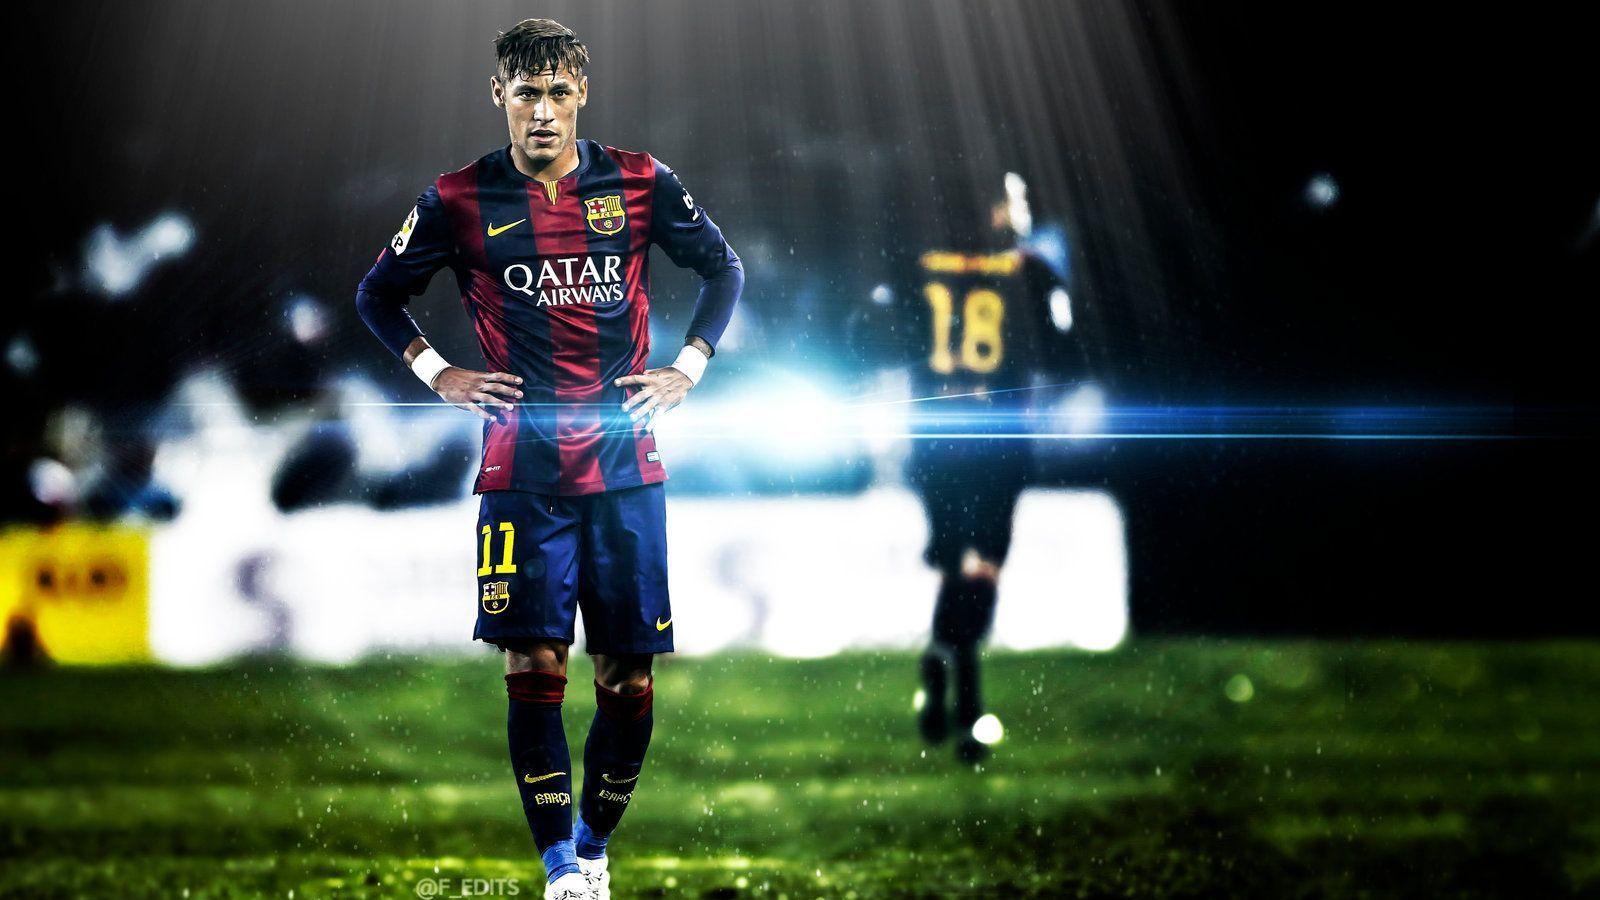 Barcelona&;s Neymar Jr. HD Wallpaper By F Edits By F EDITS